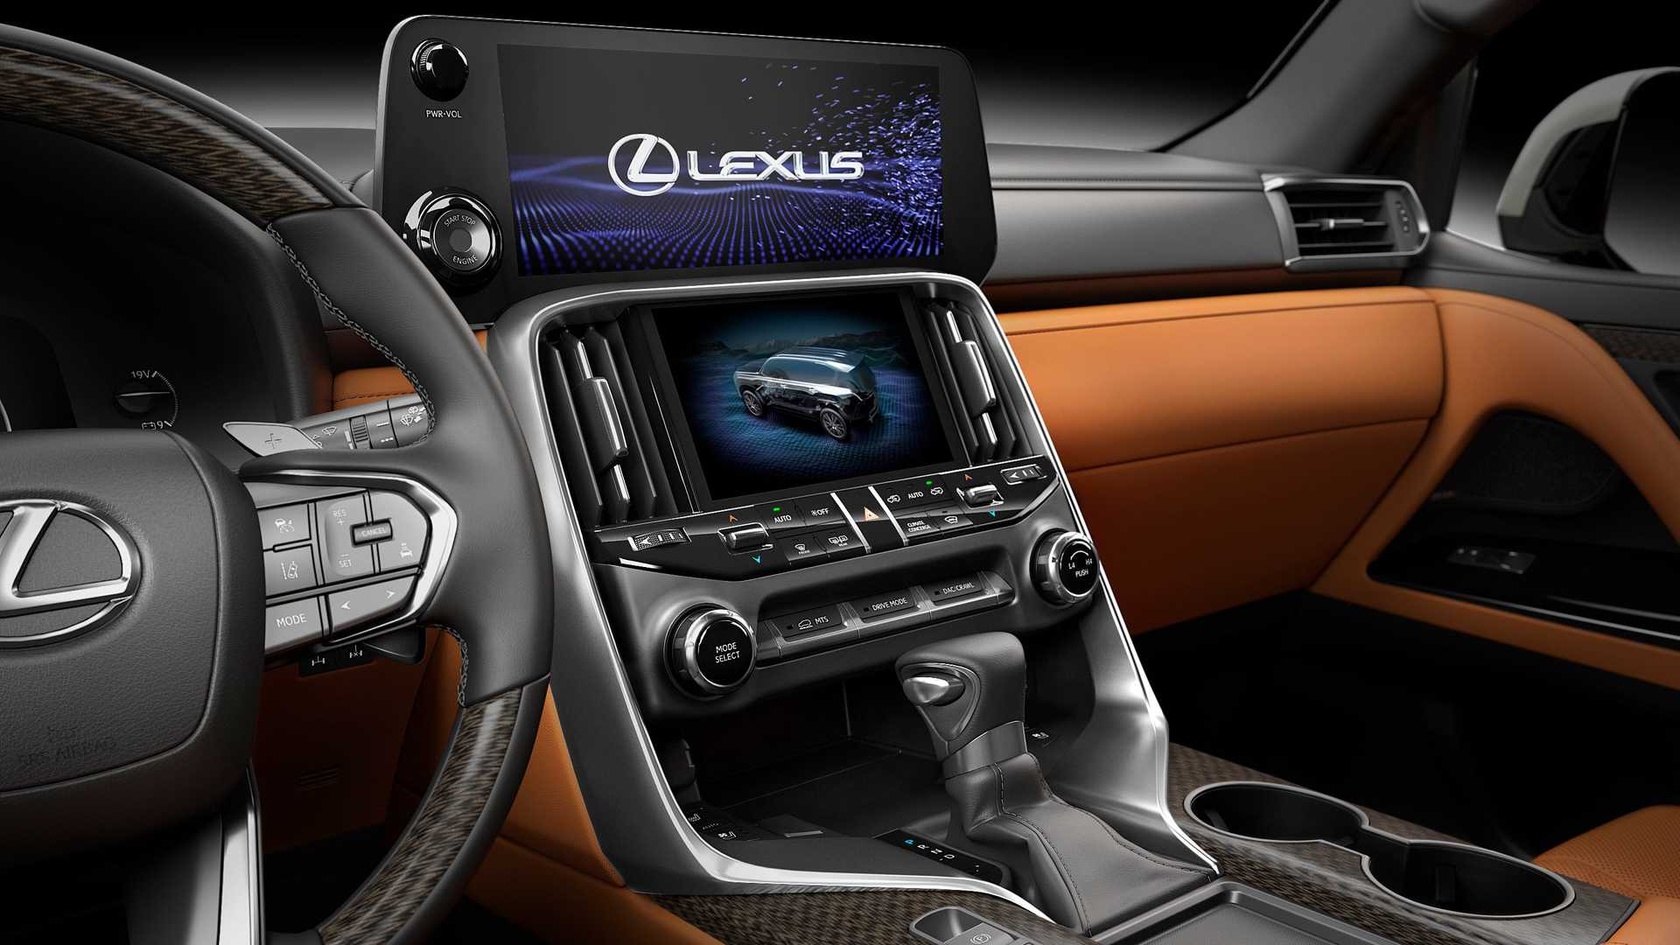 Lexus LX600